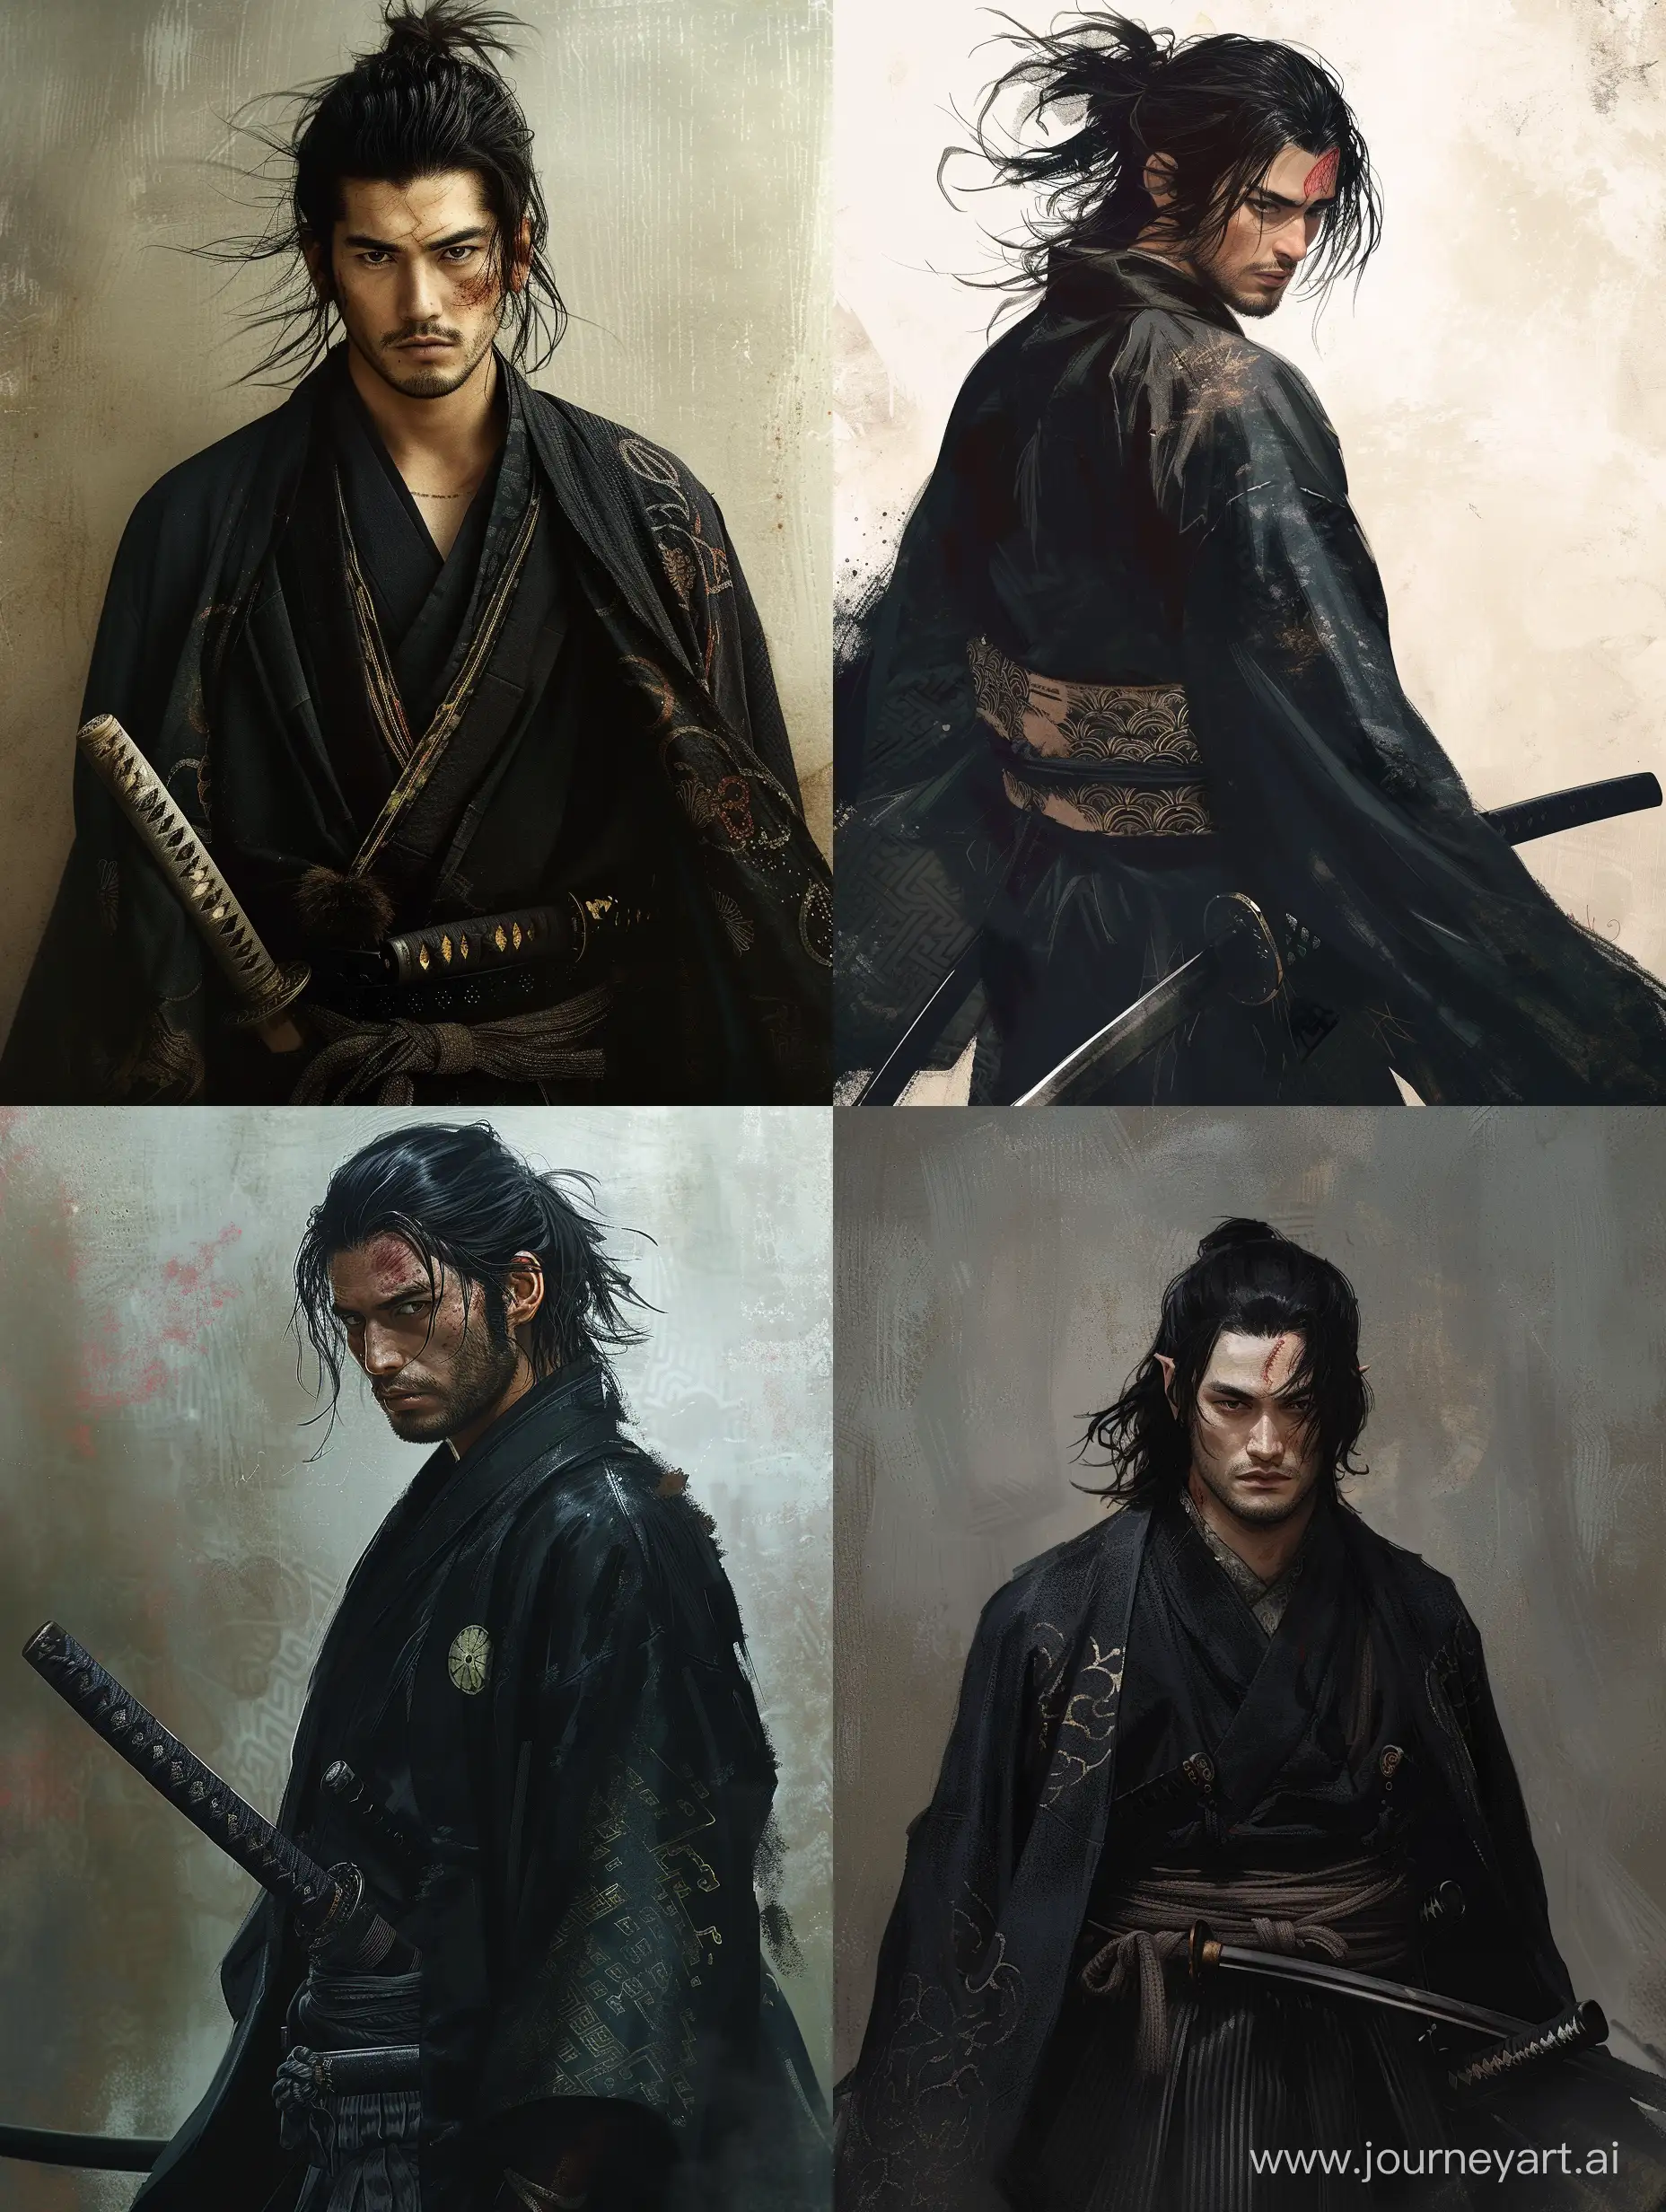 Mysterious-Samurai-with-Katana-in-Black-Kimono-and-Cloak